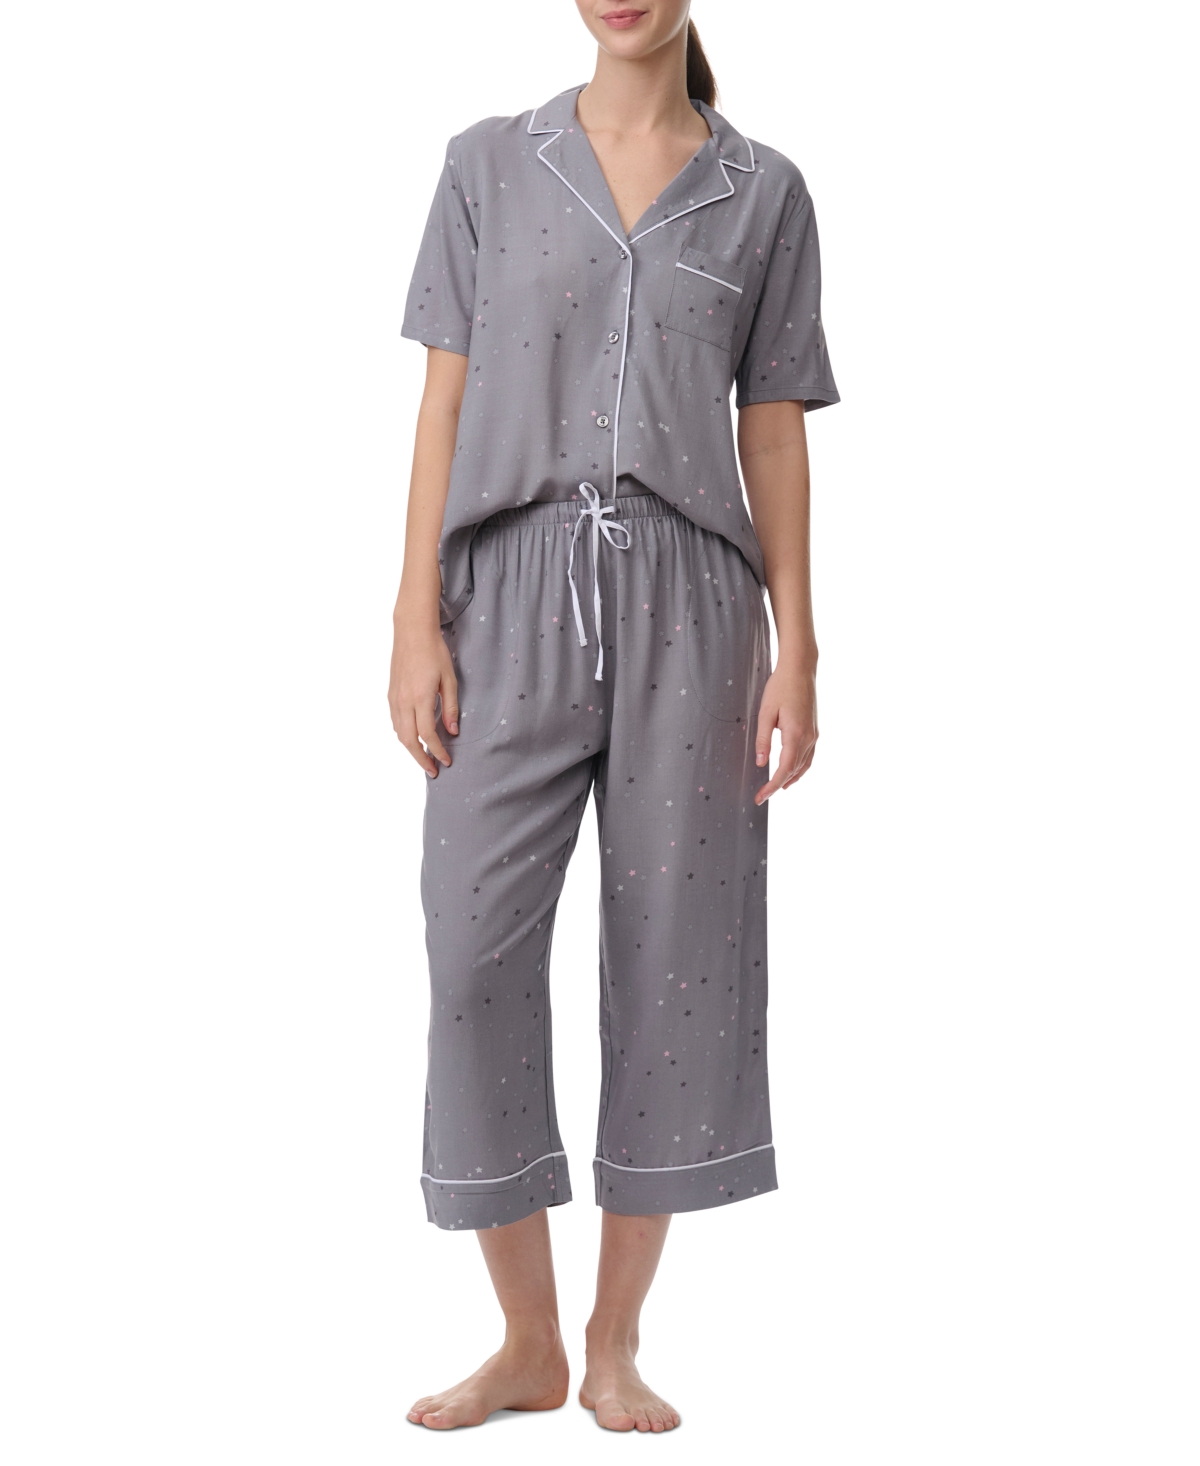 Splendid Women's Sweet Dreams Thermal Pajama Set